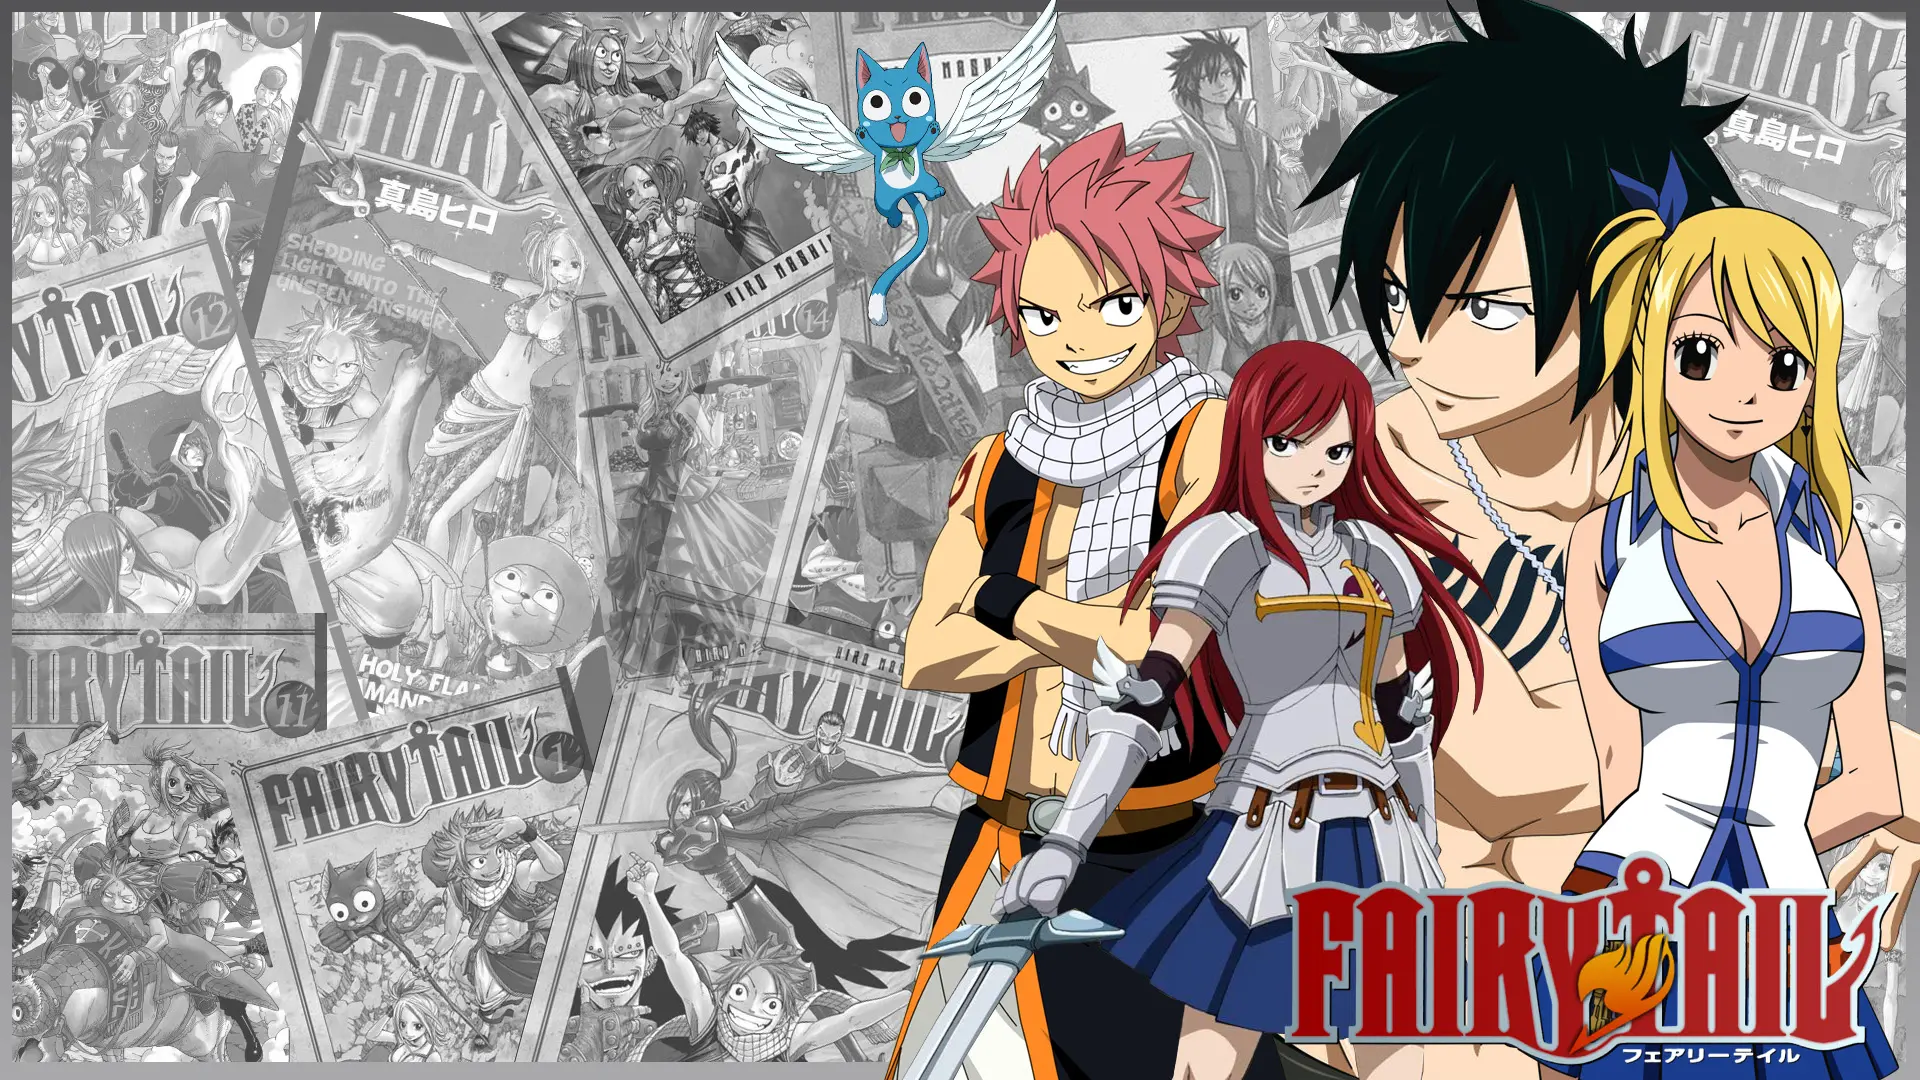 Wallpaper hd: Fairy Tail - download free in 4K, wallpaper Anime